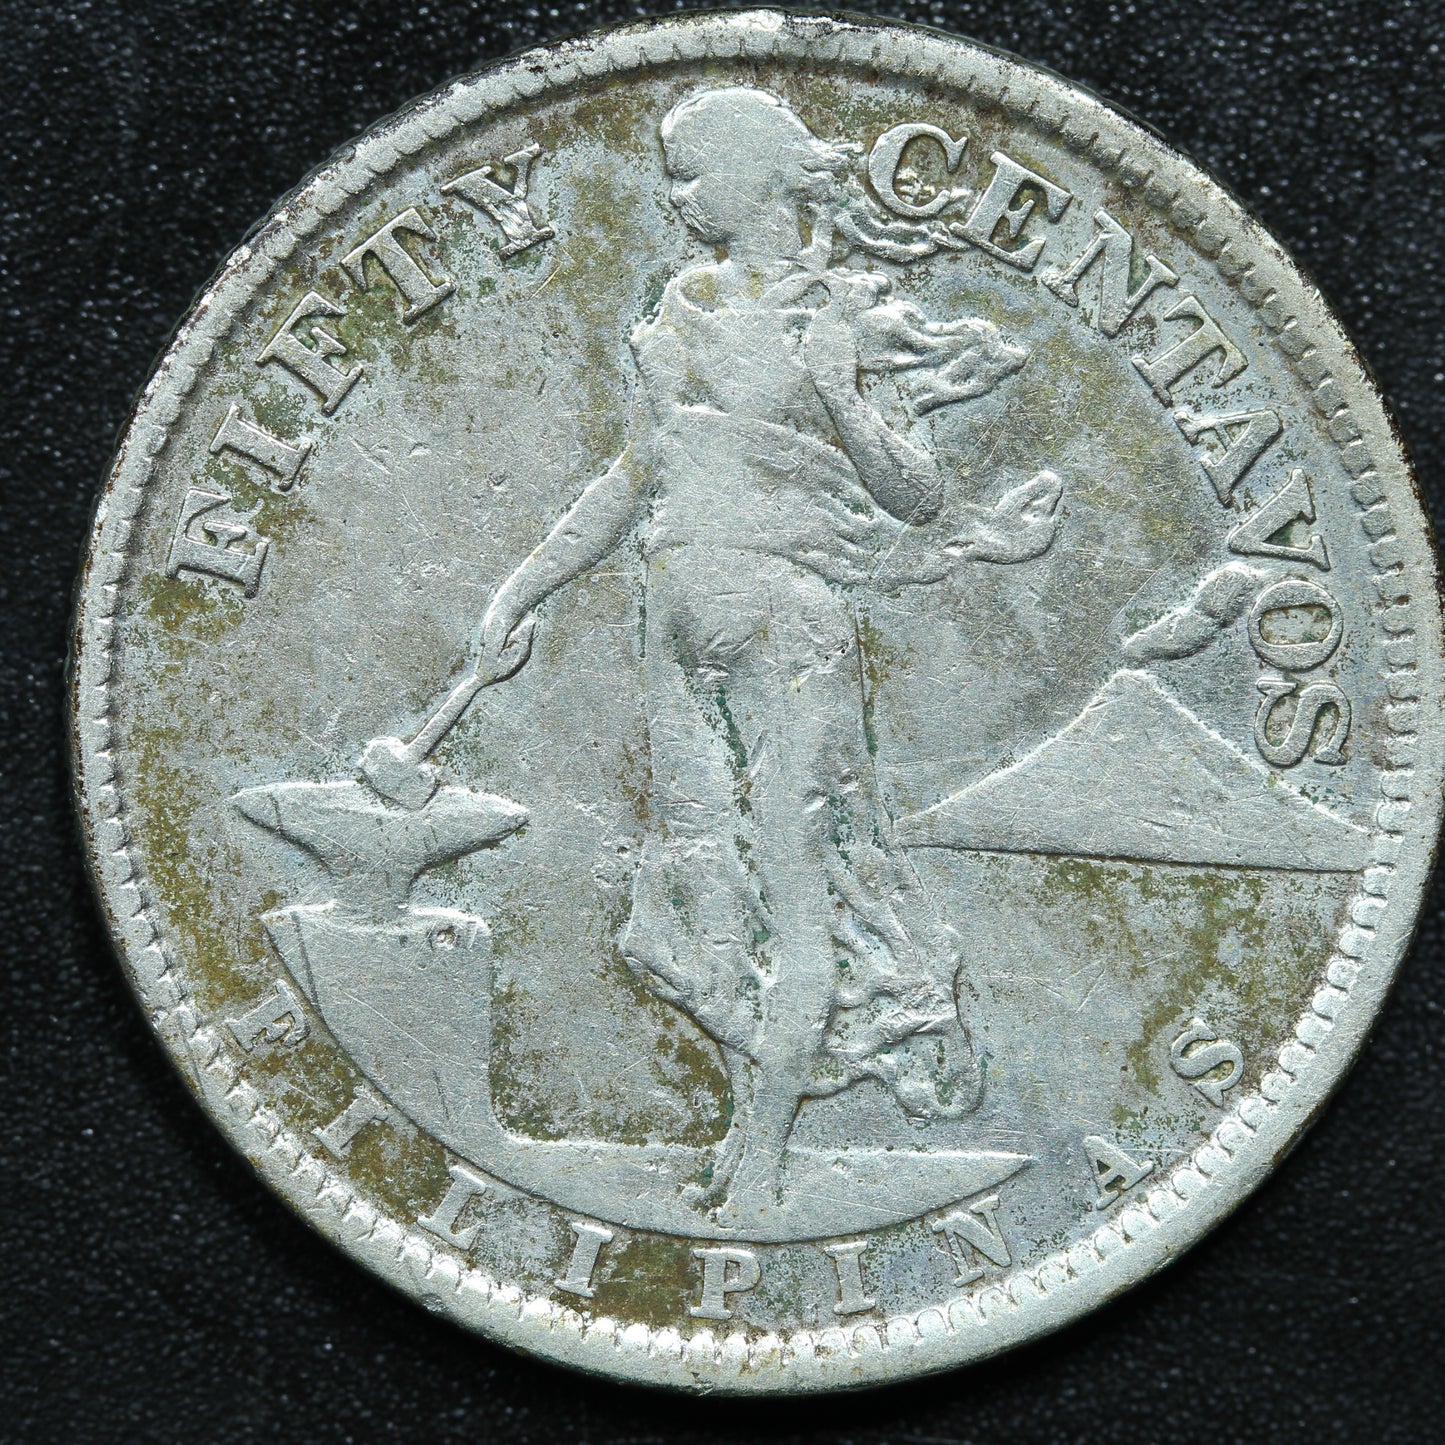 1921 50 Centavos Philippines Silver Coin -KM# 171